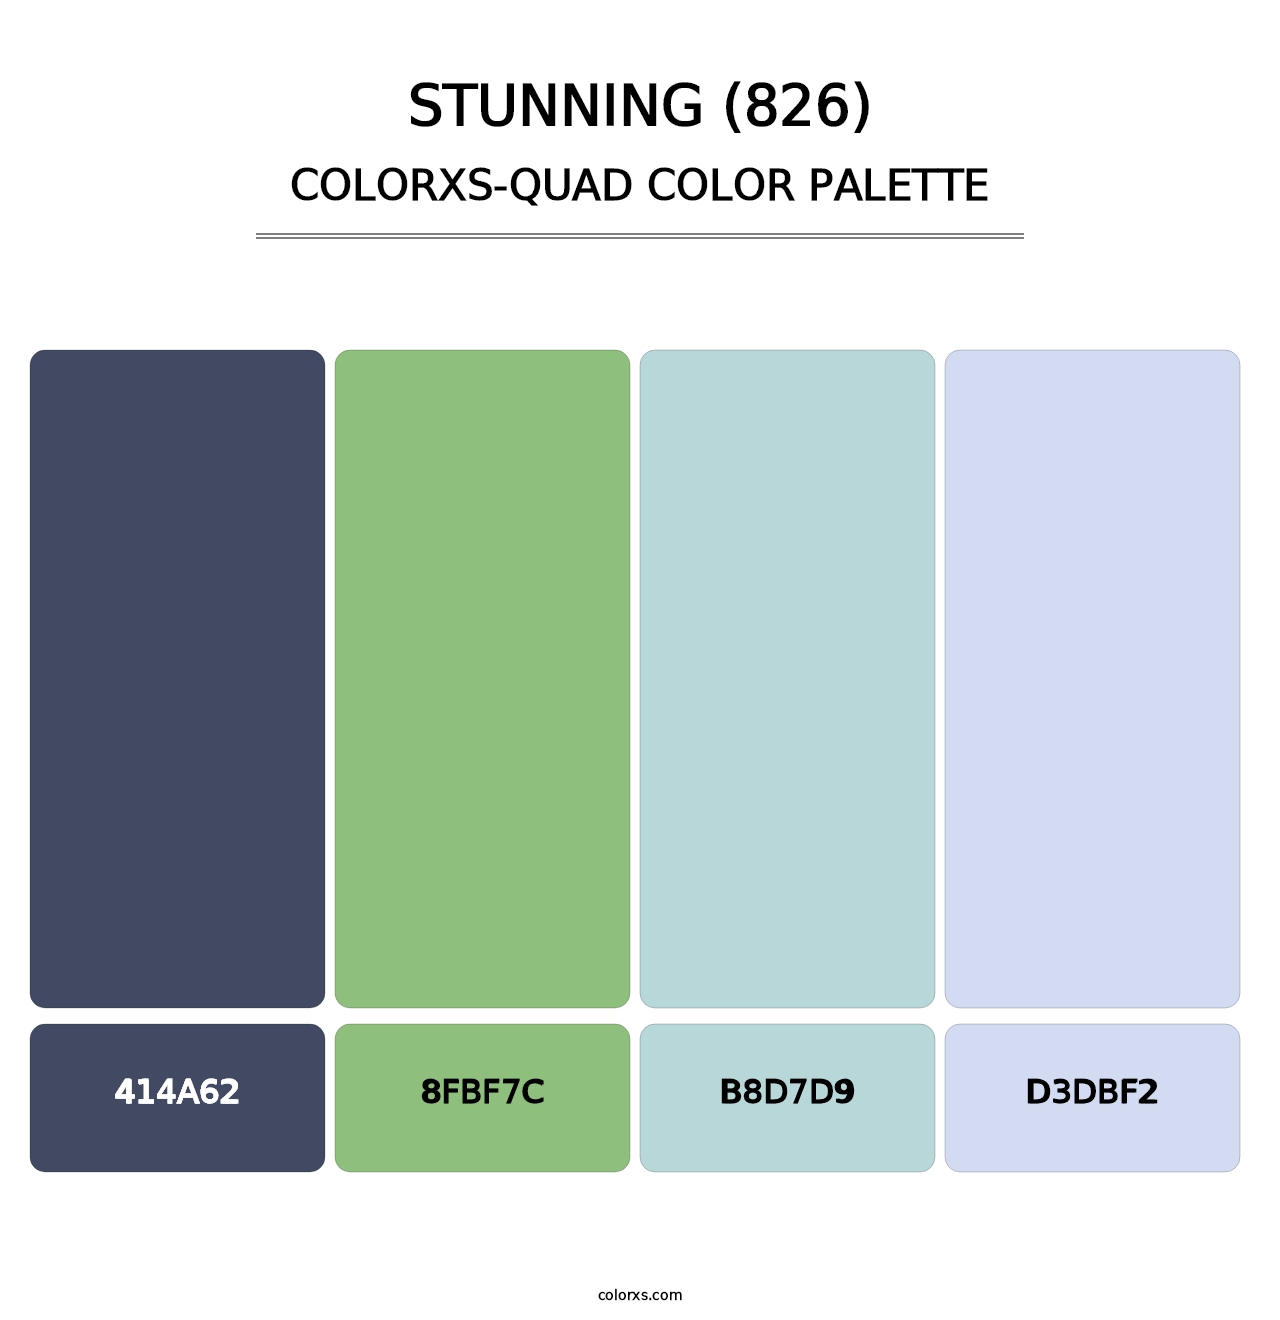 Stunning (826) - Colorxs Quad Palette